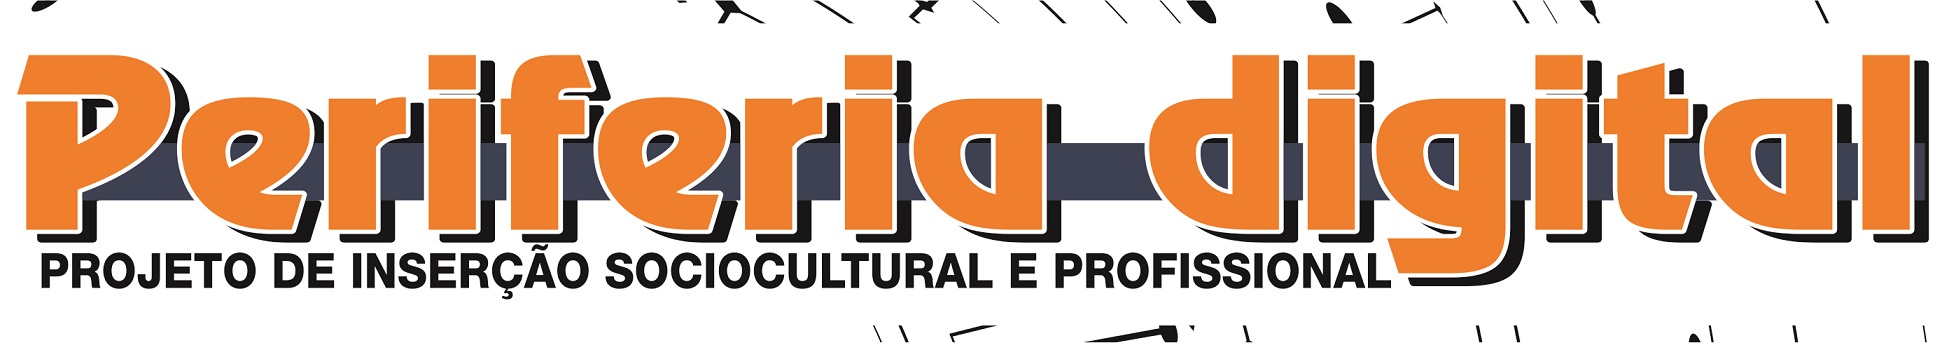 Logo Pd- Periferia Digital